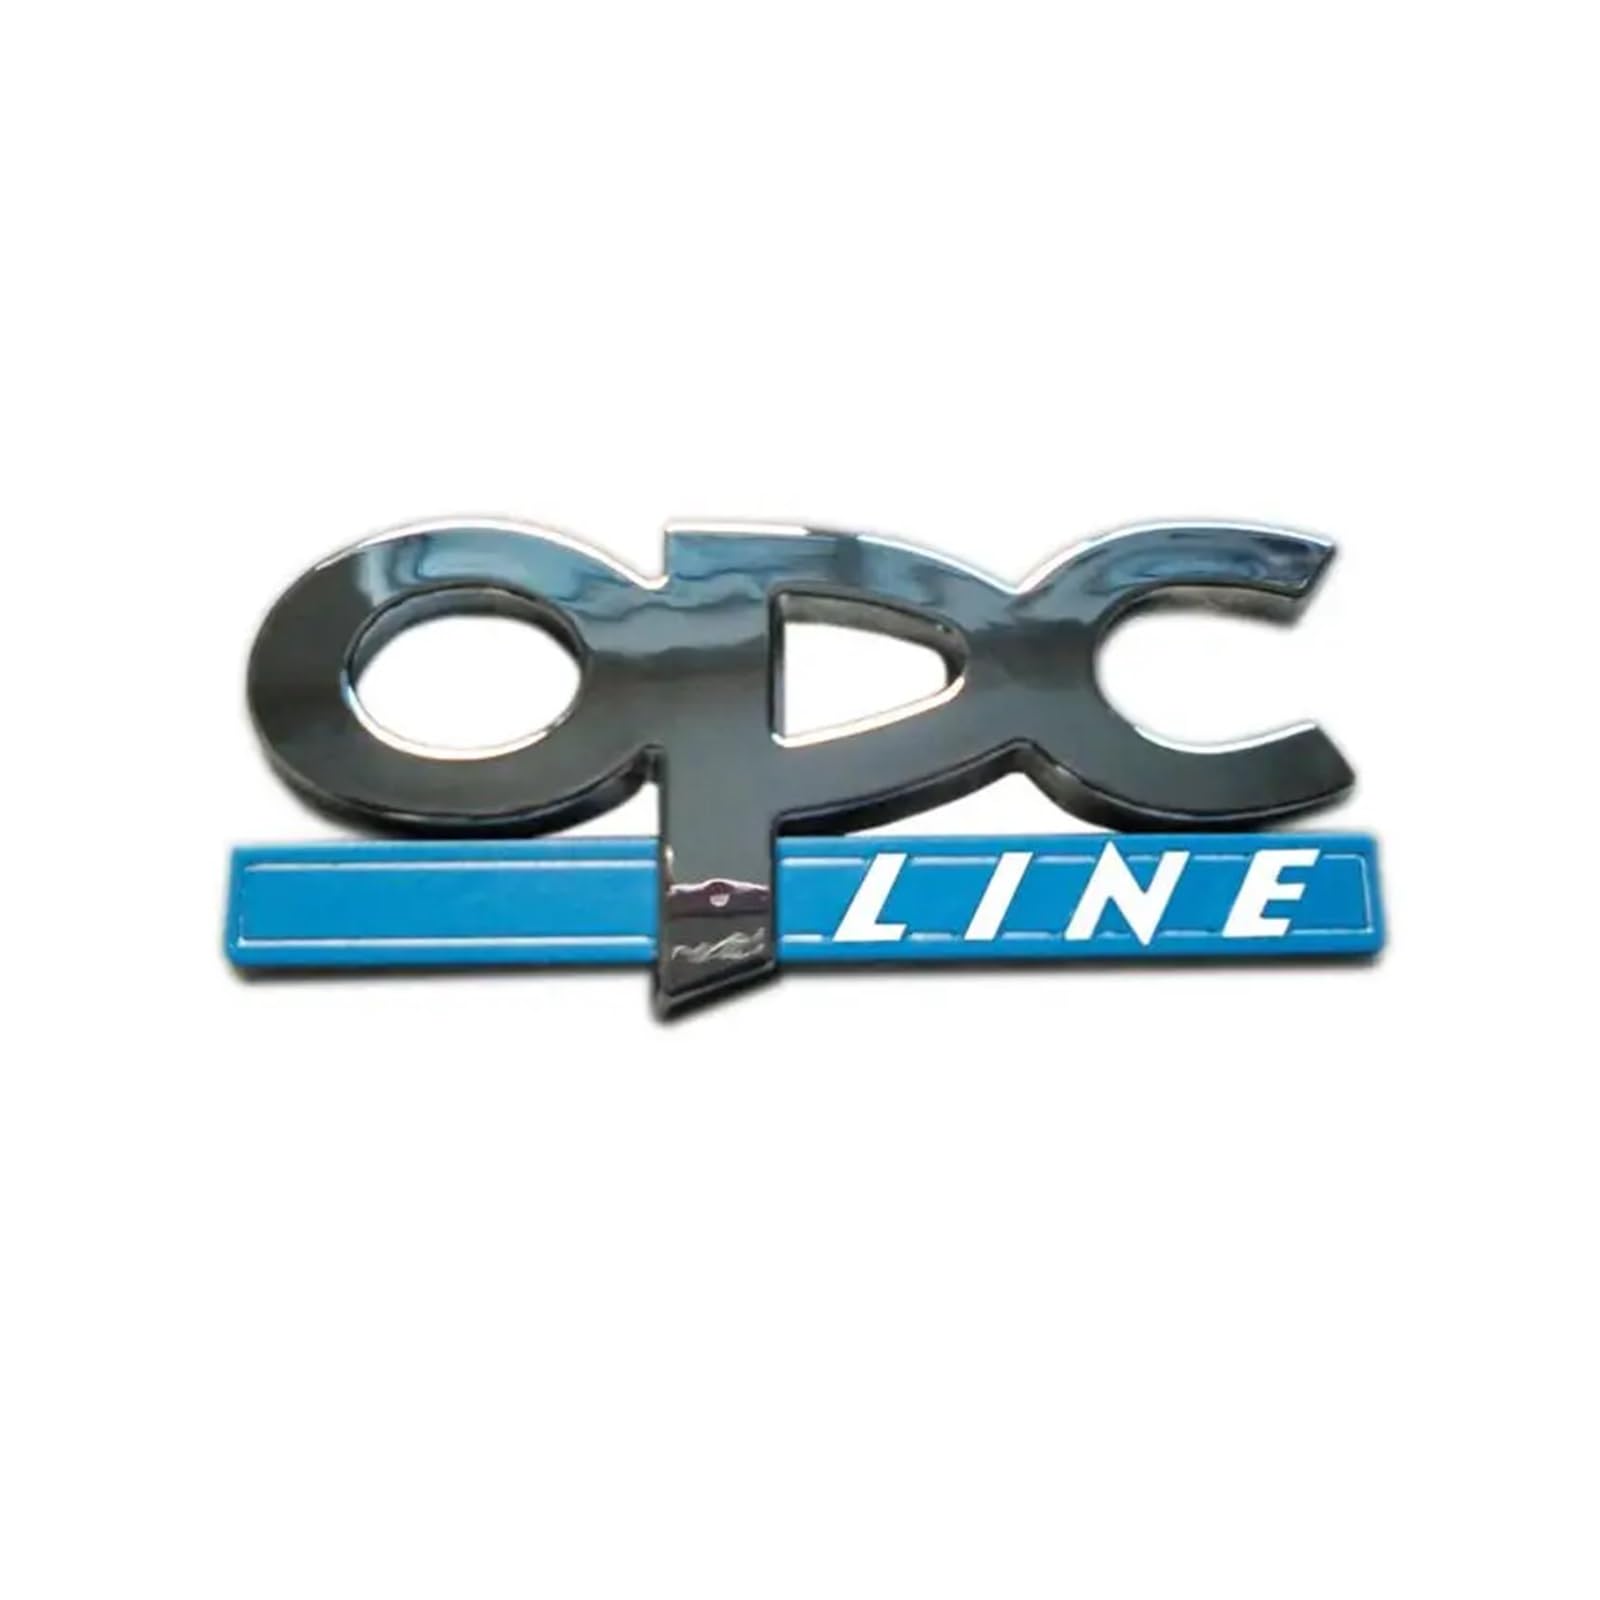 yzw6688 Kunststoff Chrom OPCLINE OPC LINE Automobil Modifikation Aufkleber Emblem Abzeichen von GerRit